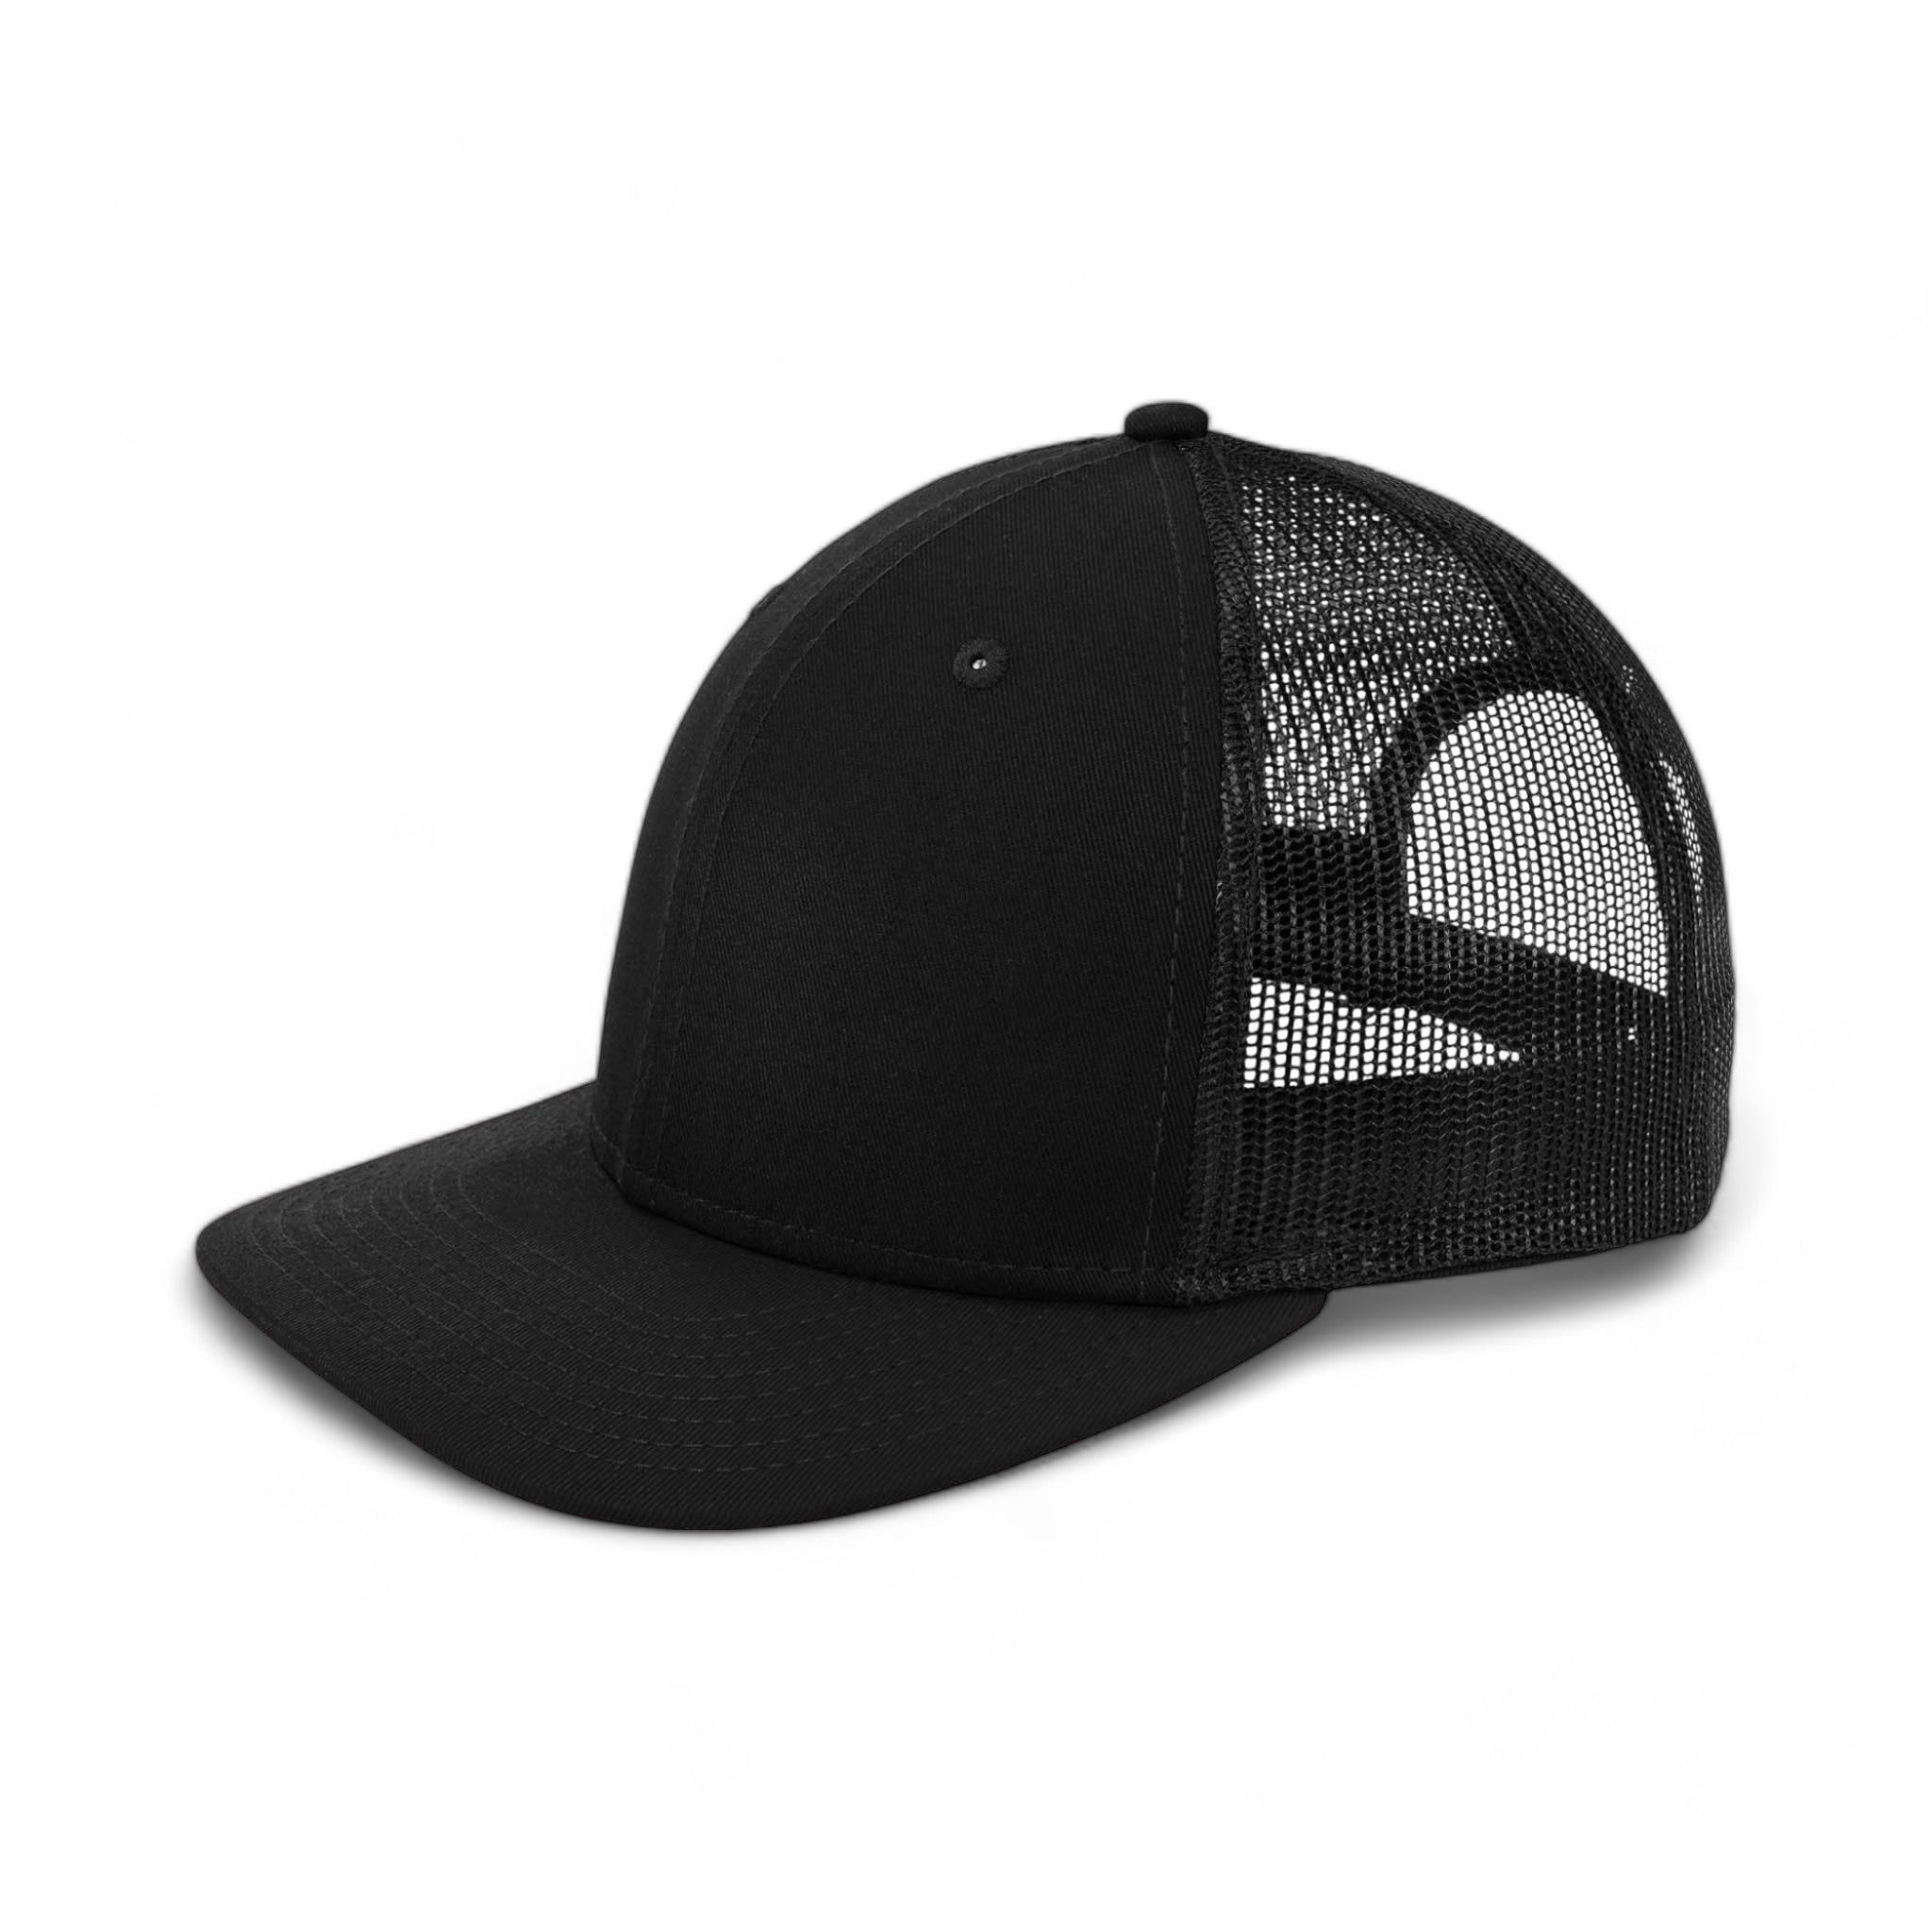 Side view of New Era NE207 custom hat in black